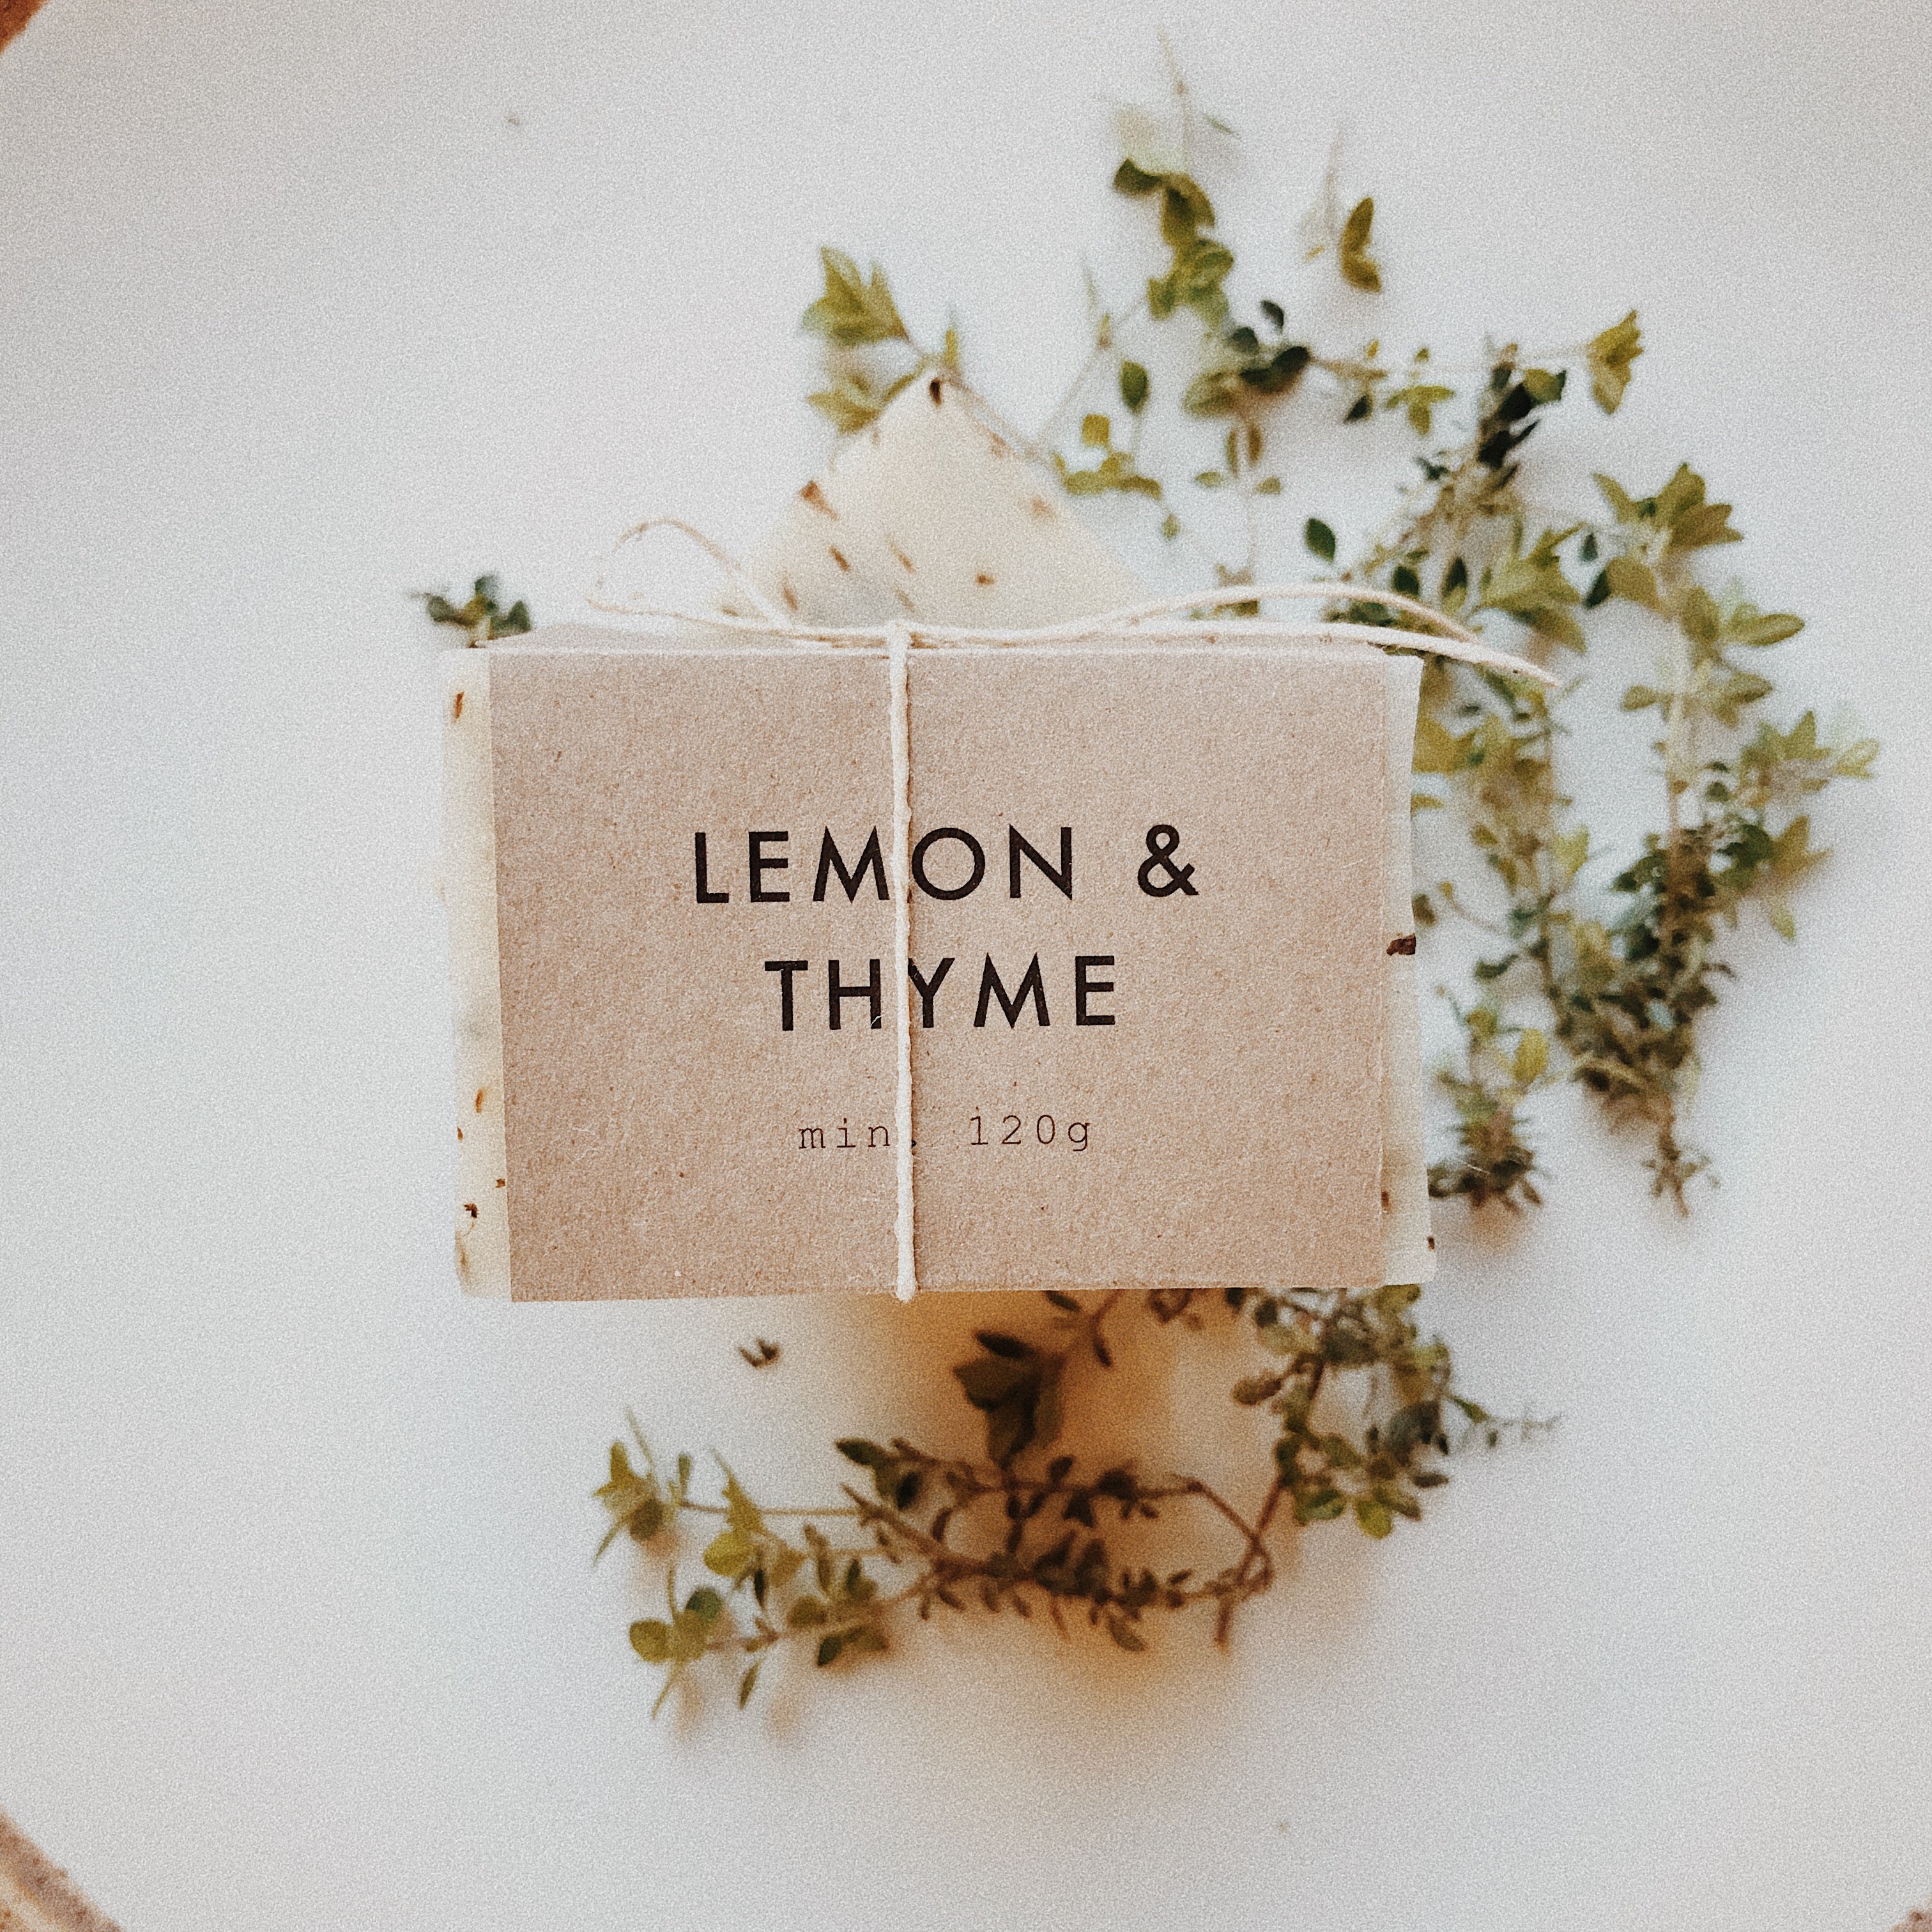 Lemon & thyme